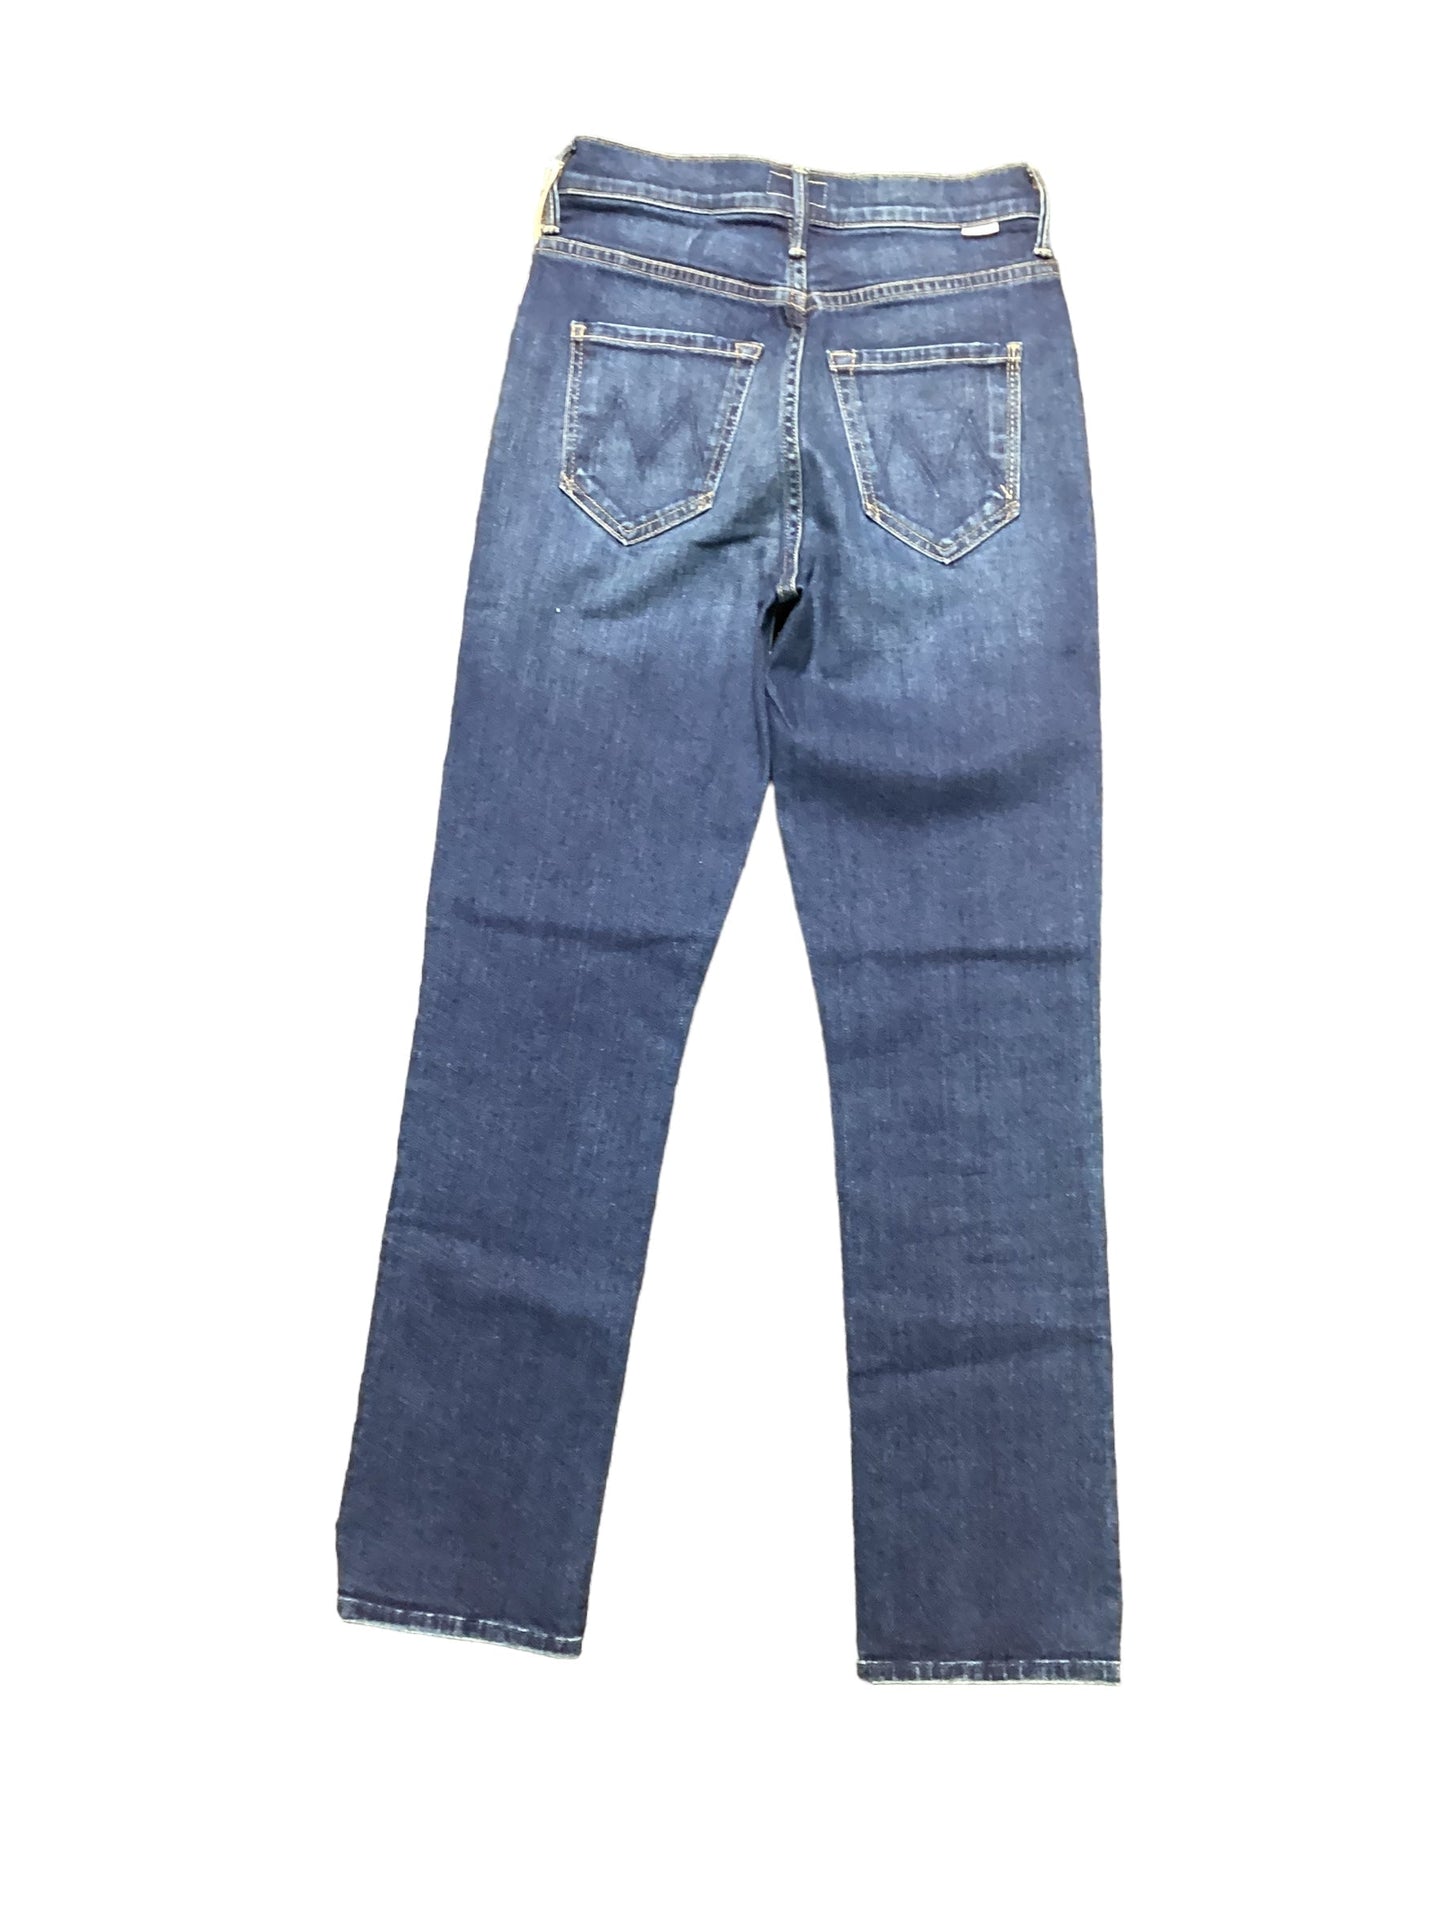 Blue Denim Jeans Straight Mother Jeans, Size 0